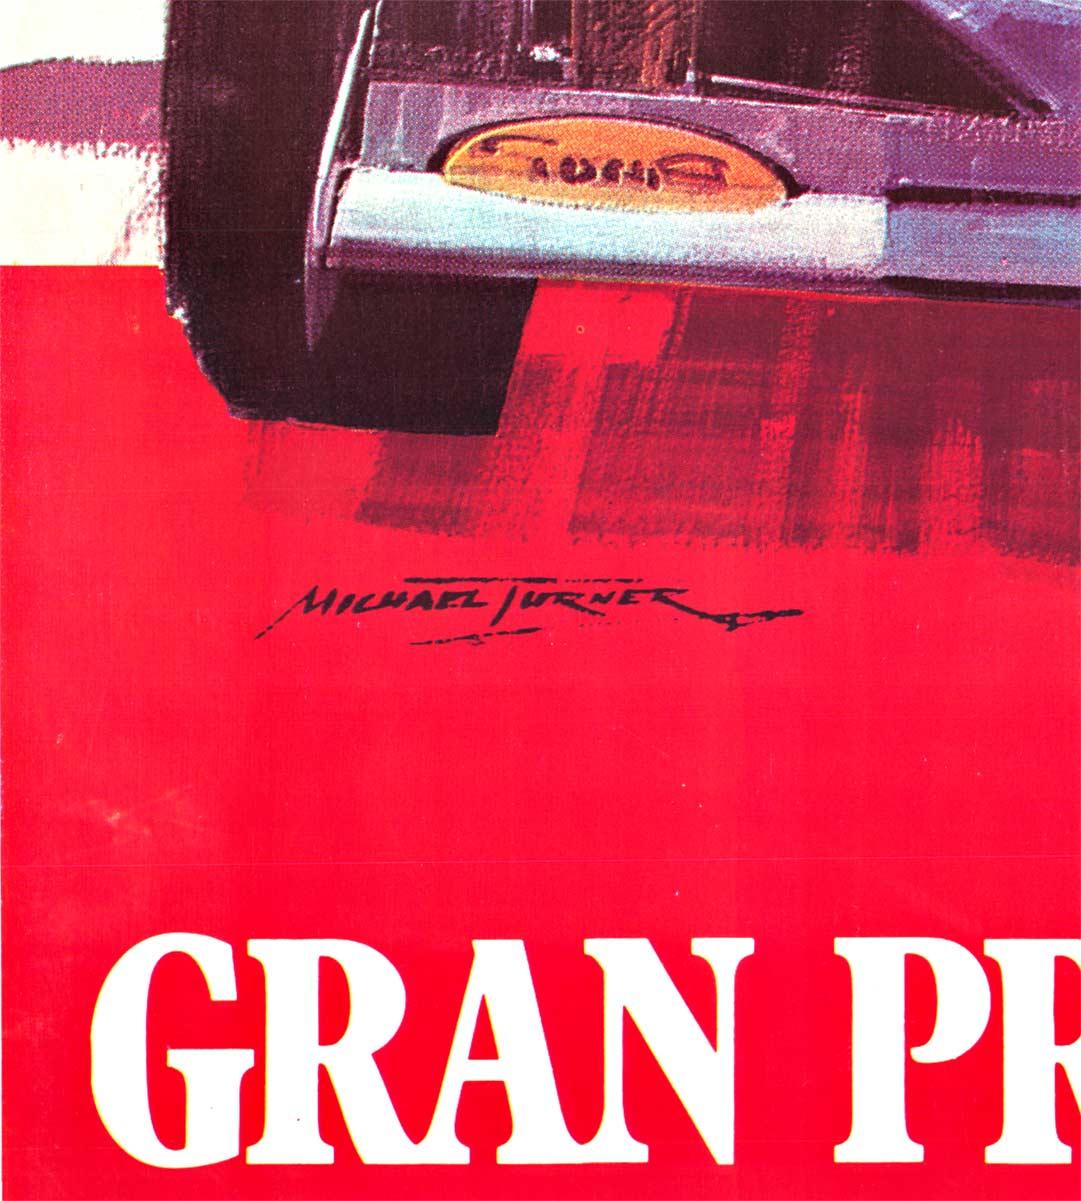 Original XXII Gran Premiio de Espana vintage racing poster, Formula 1 - Print by Michael Turner